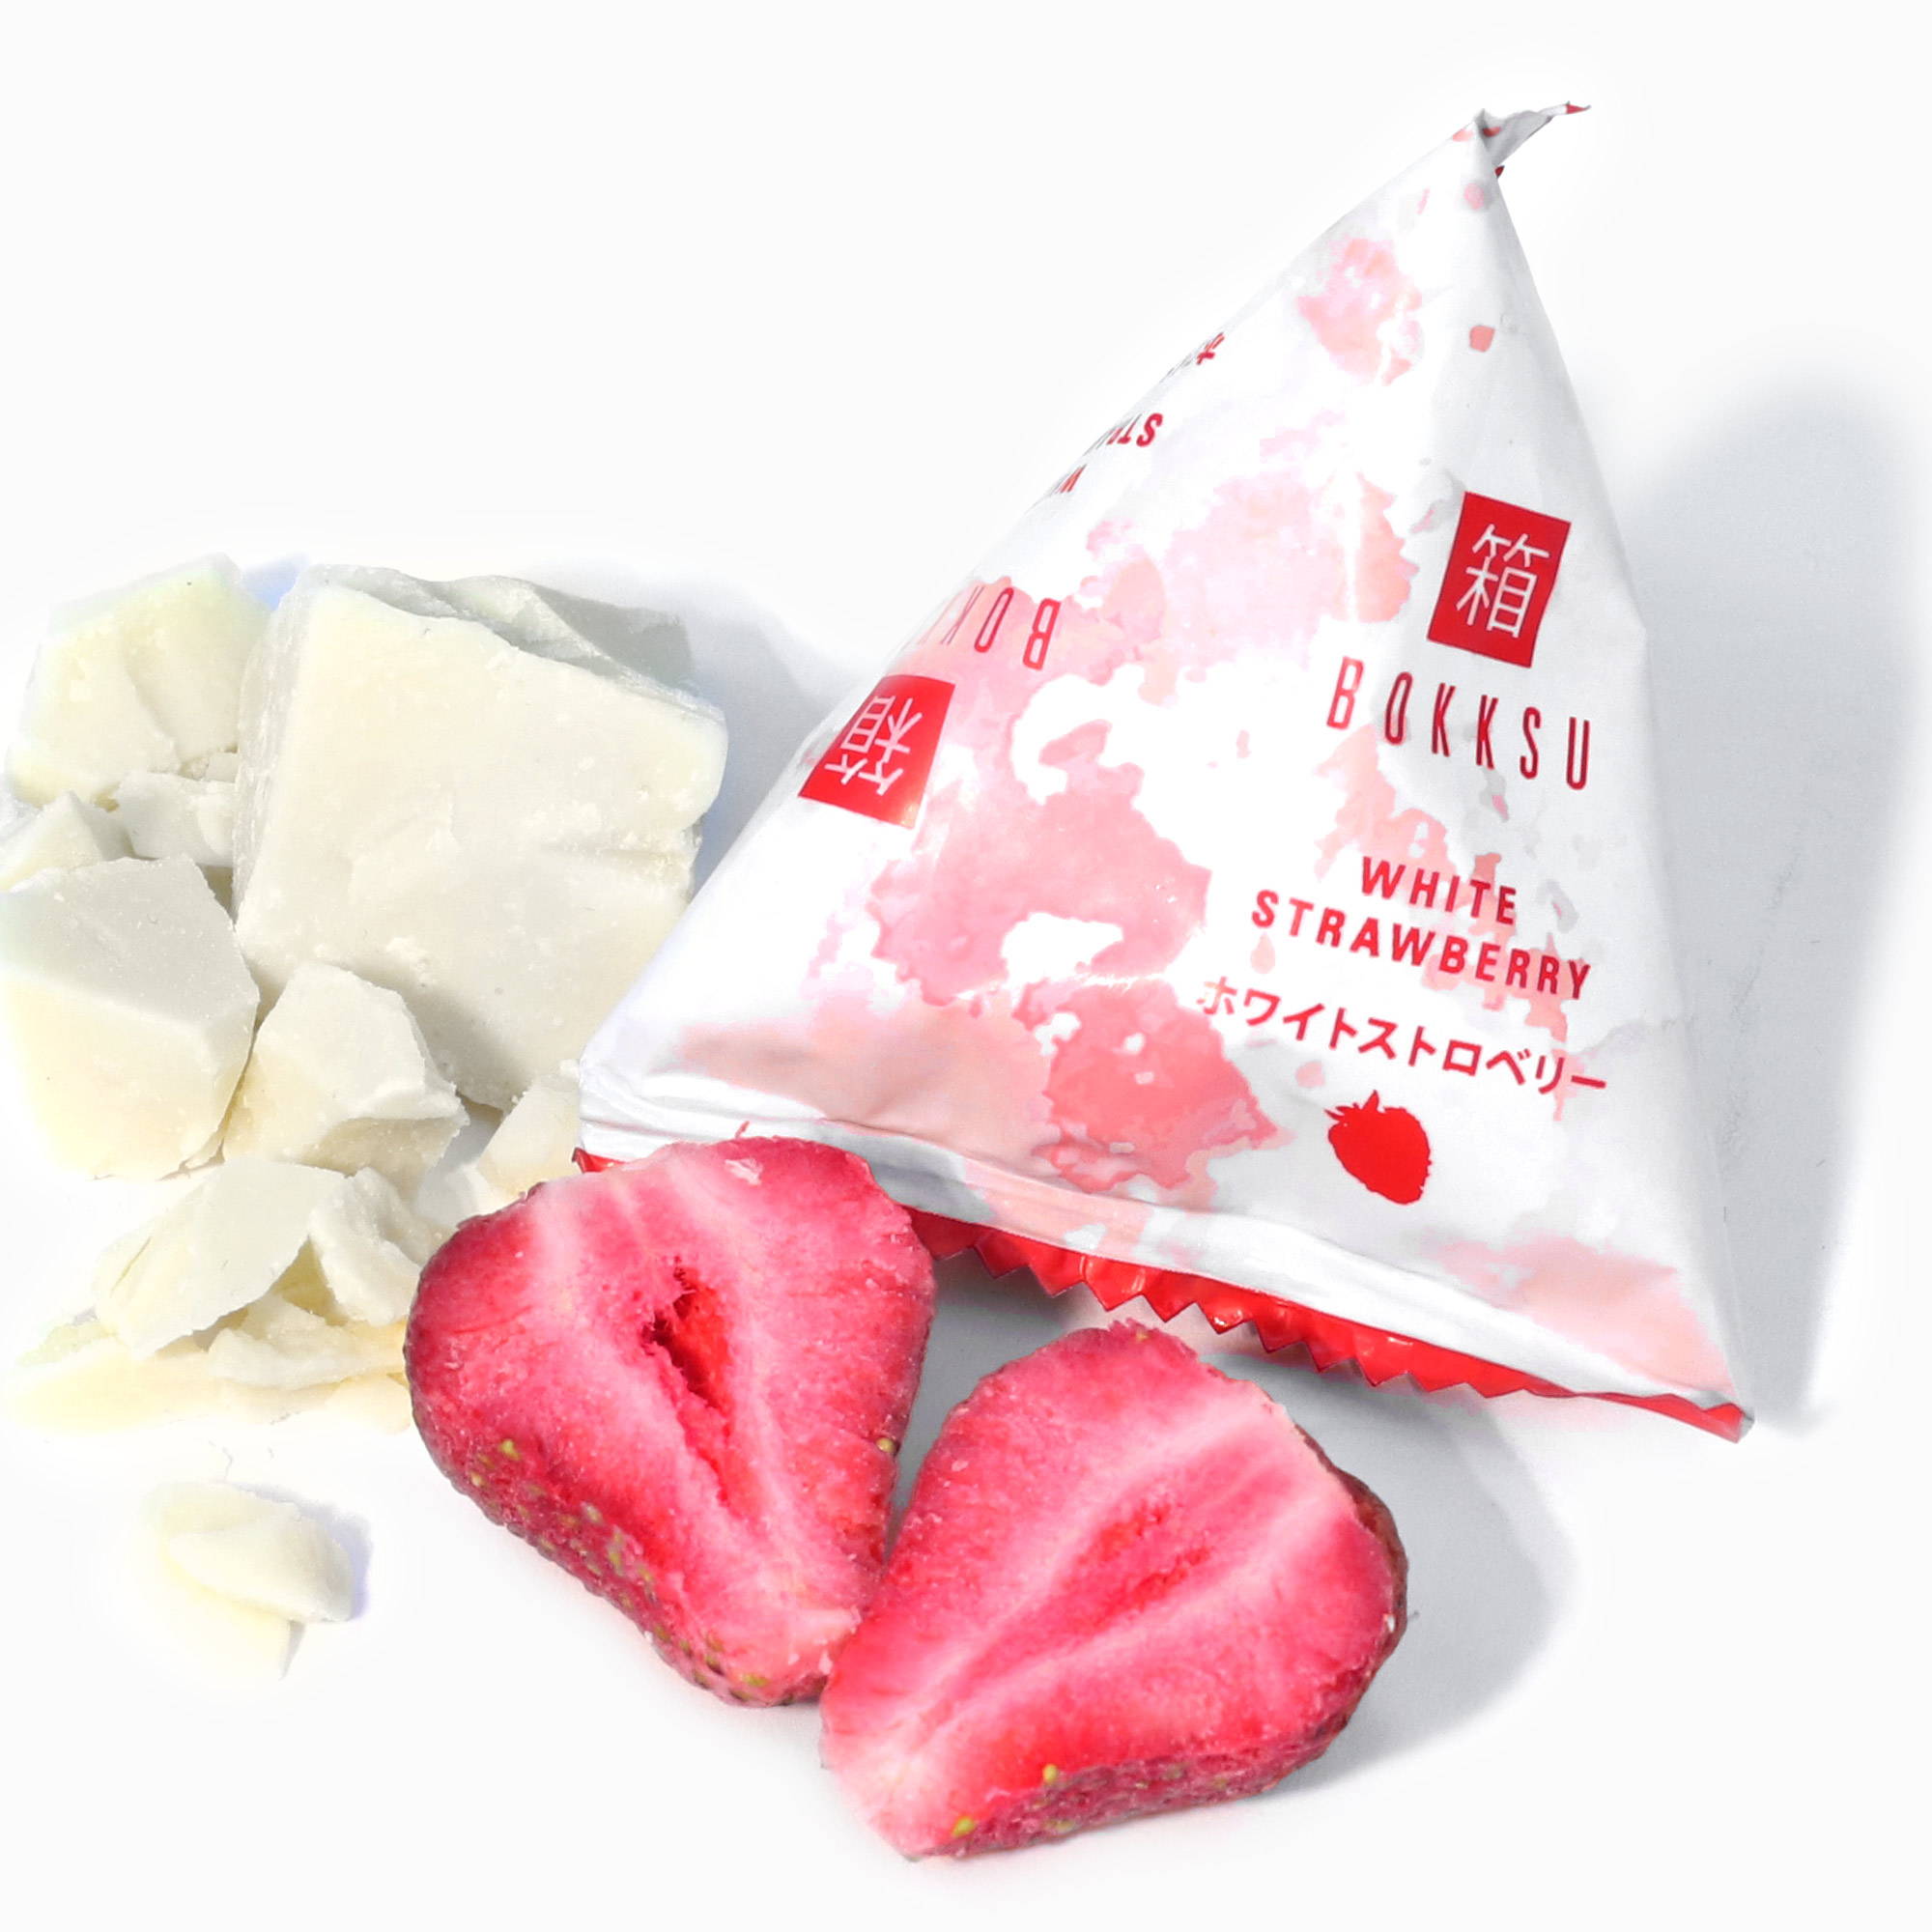 Bokksu white chocolate strawberry 